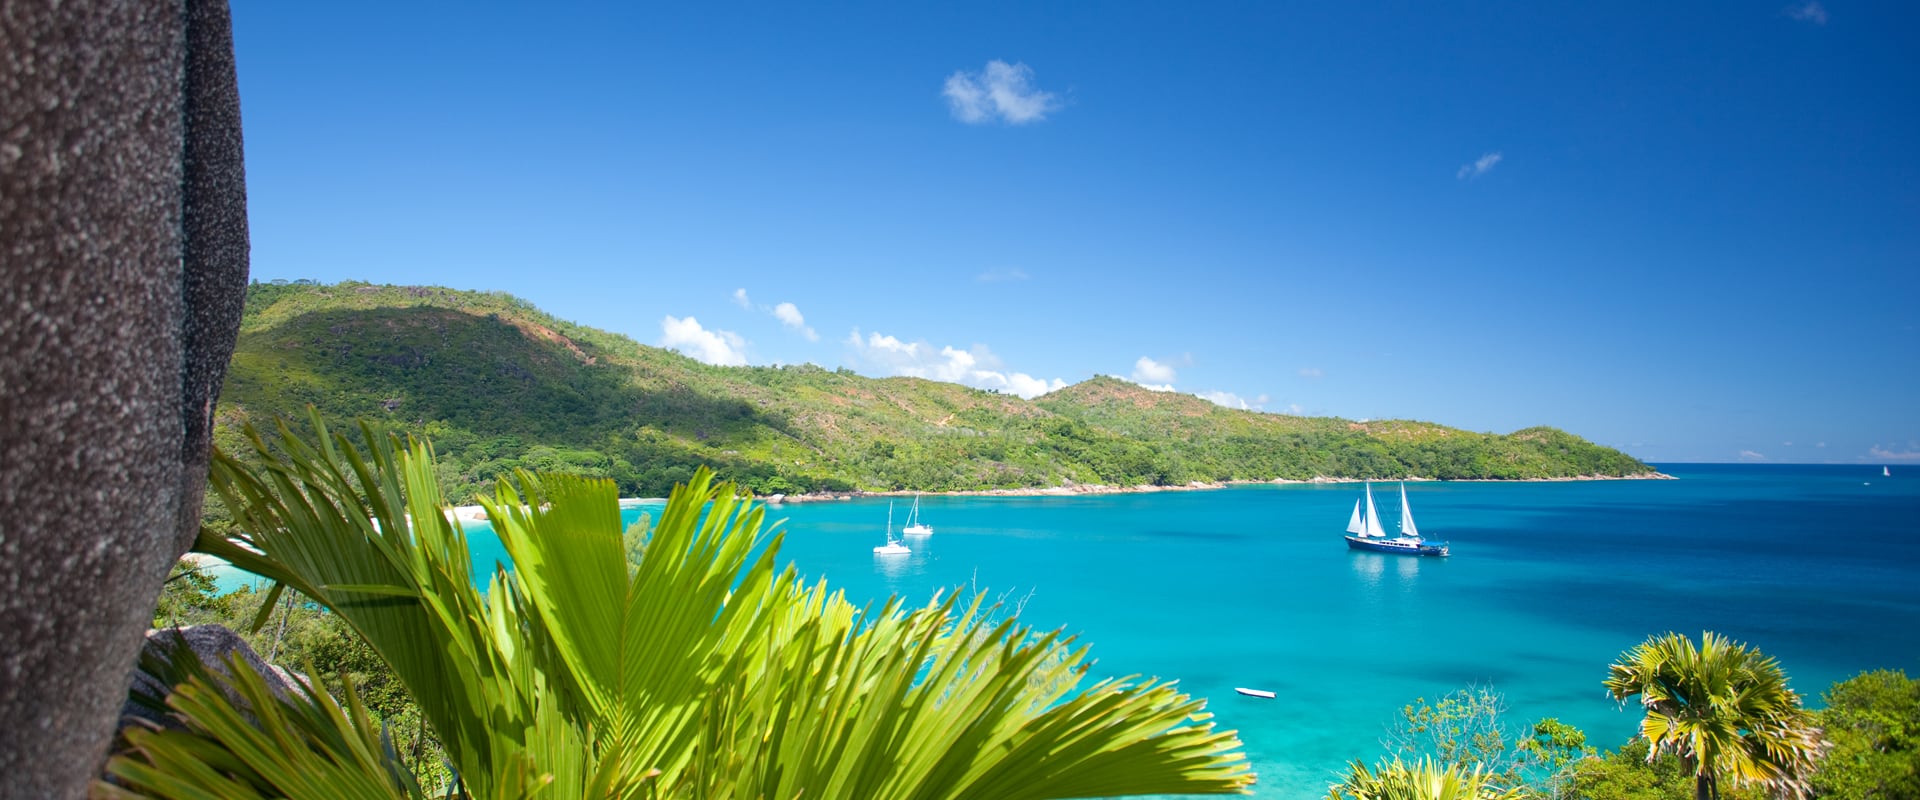 8 Small Ship Cruises in Seychelles - LiveAboard.com